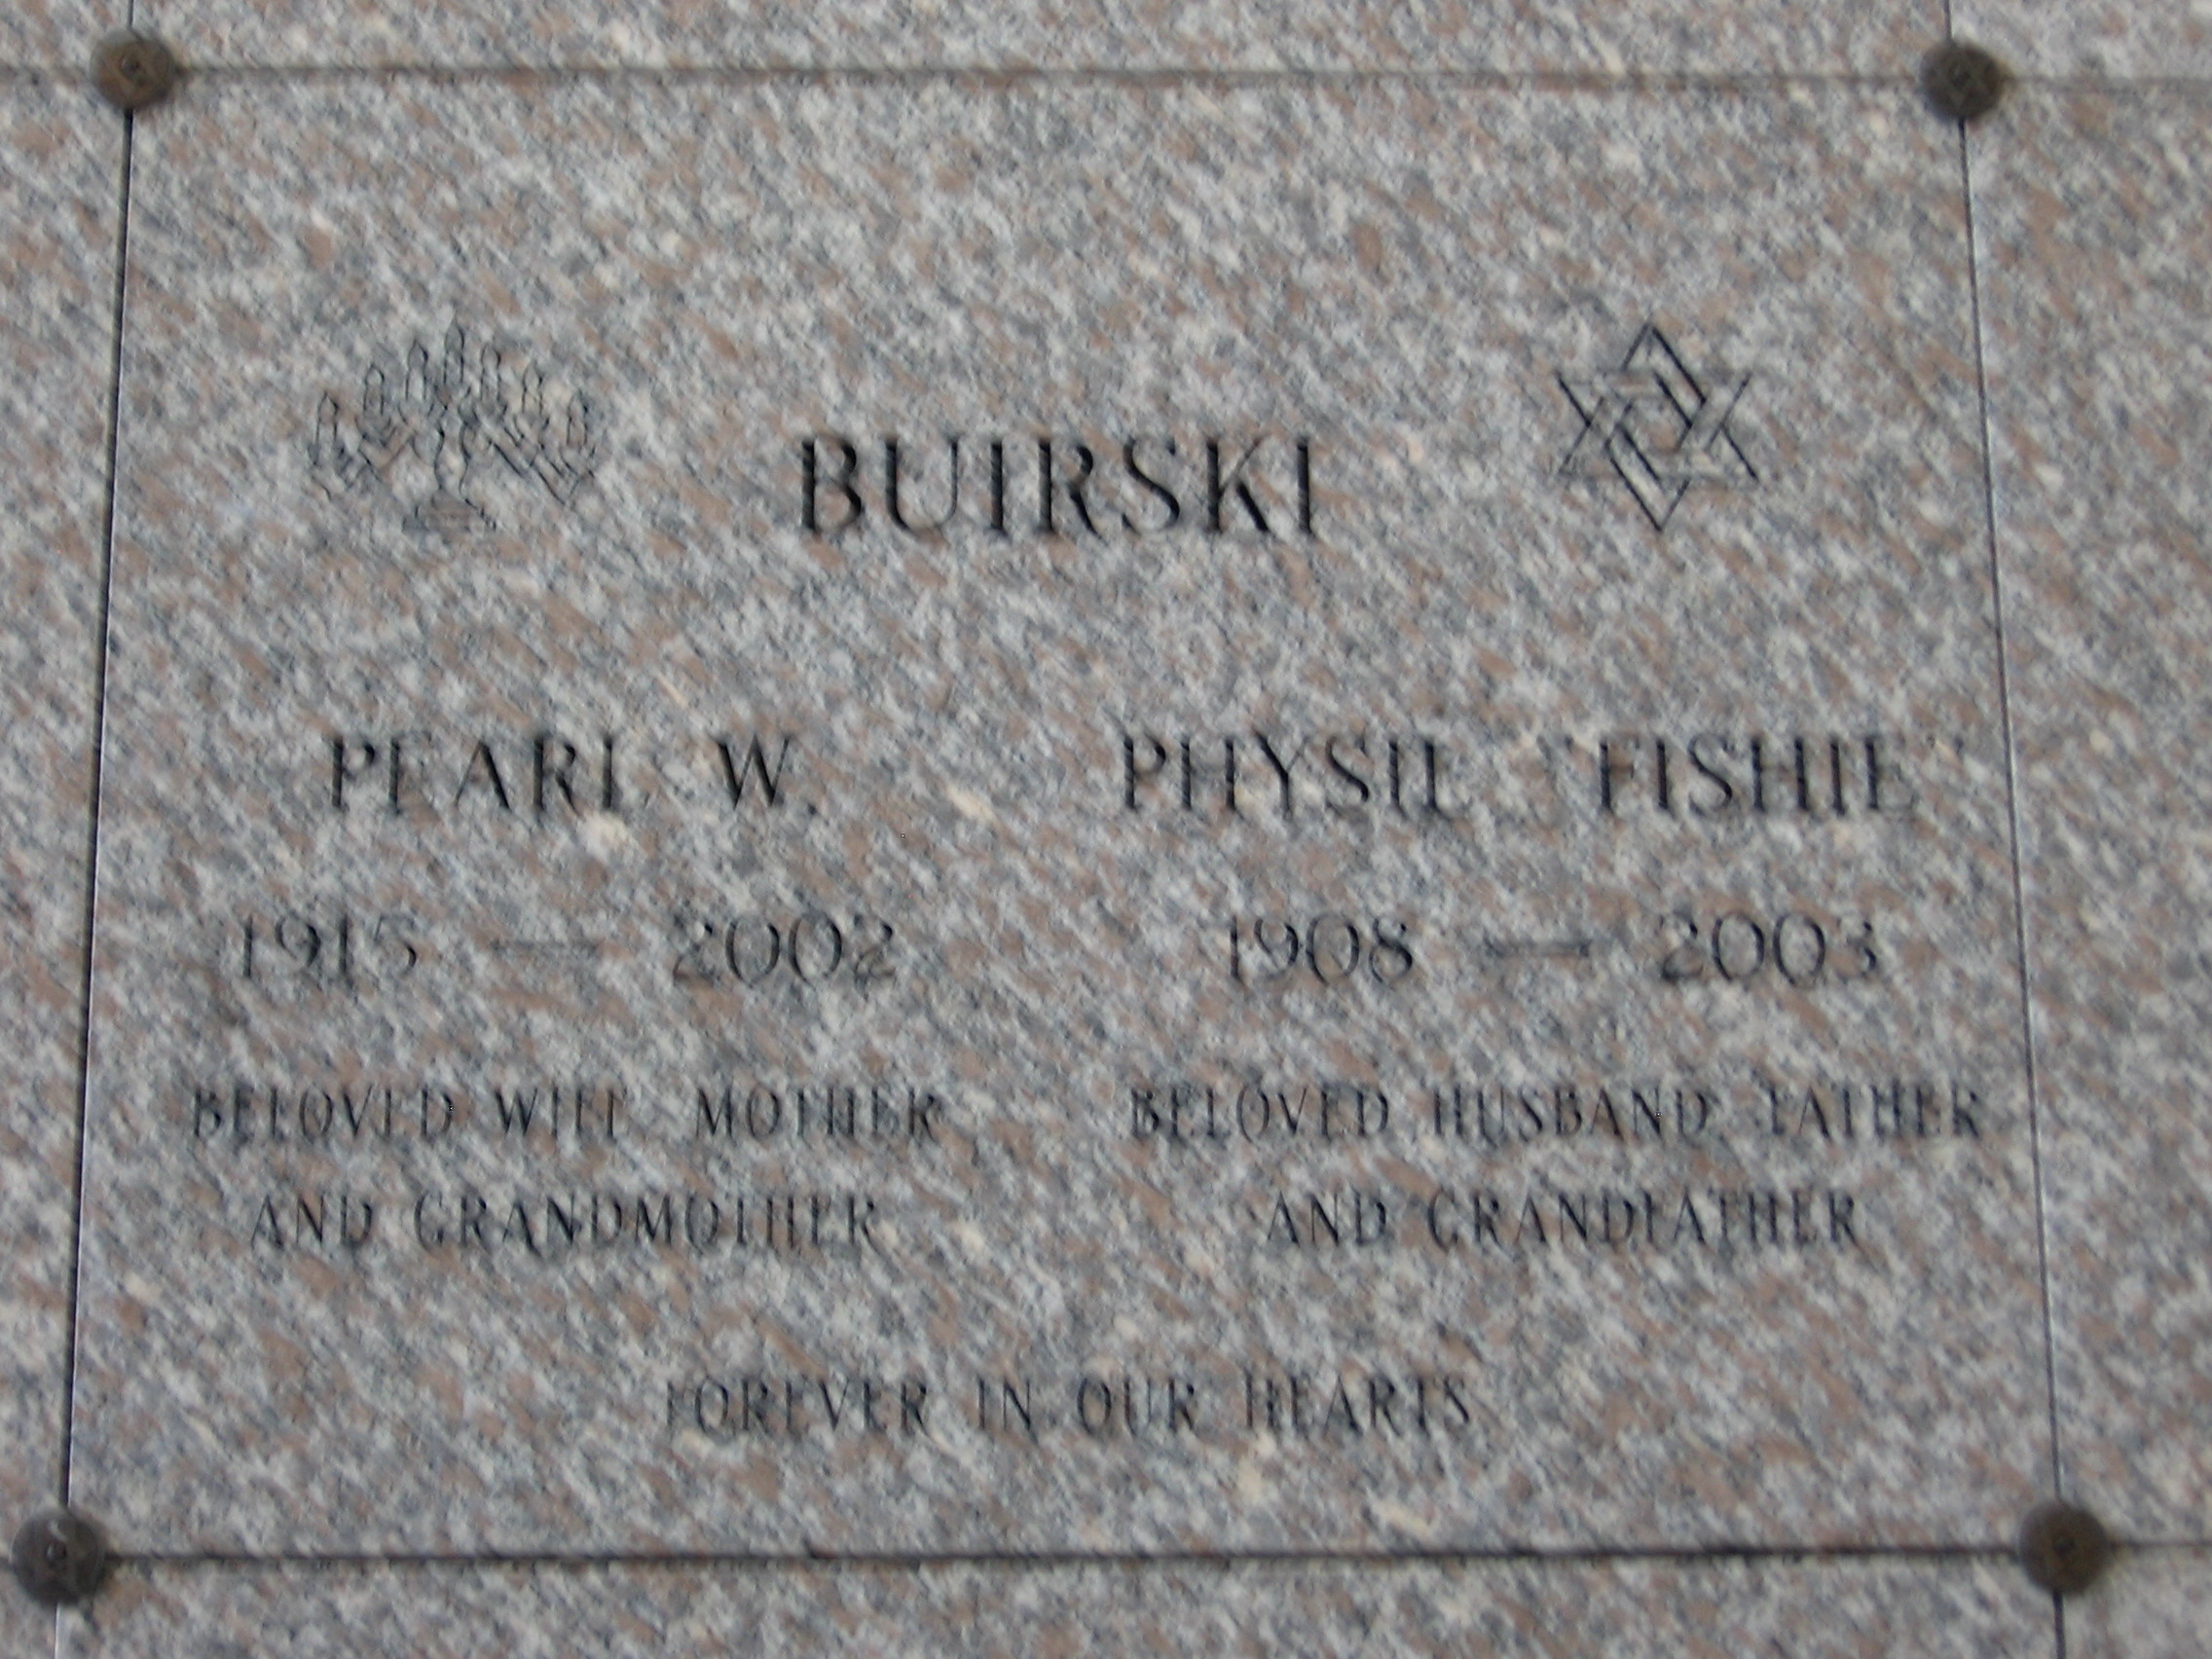 Pearl W Buirski